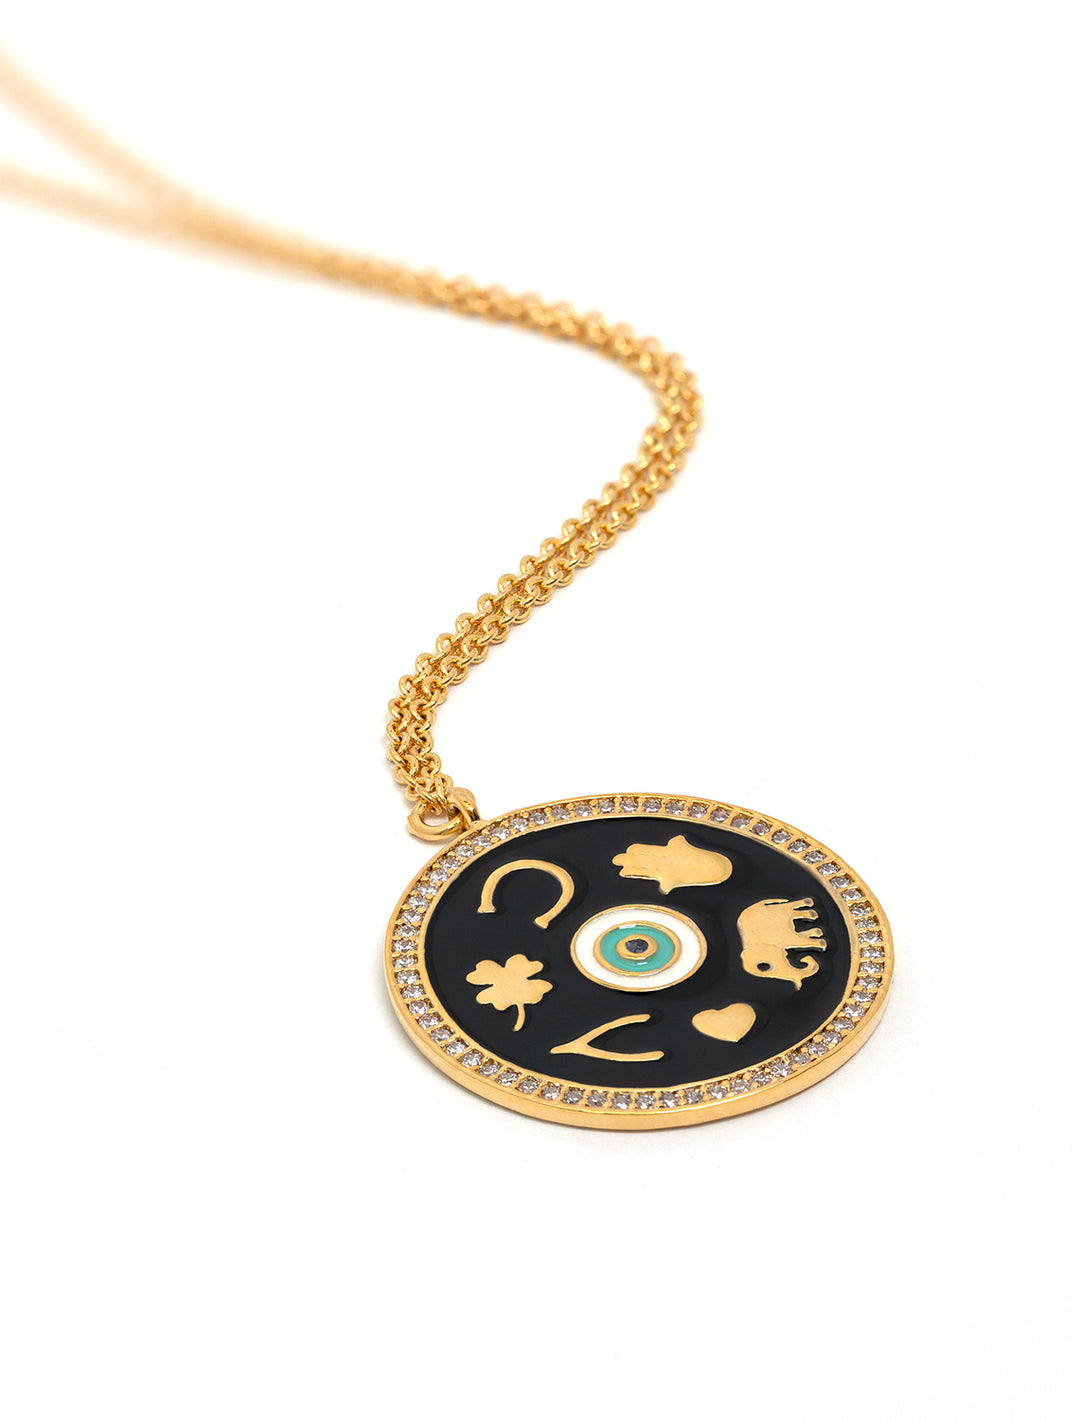 Stylized laydown of Tai Jewelry's black enamel luck pendant in gold.